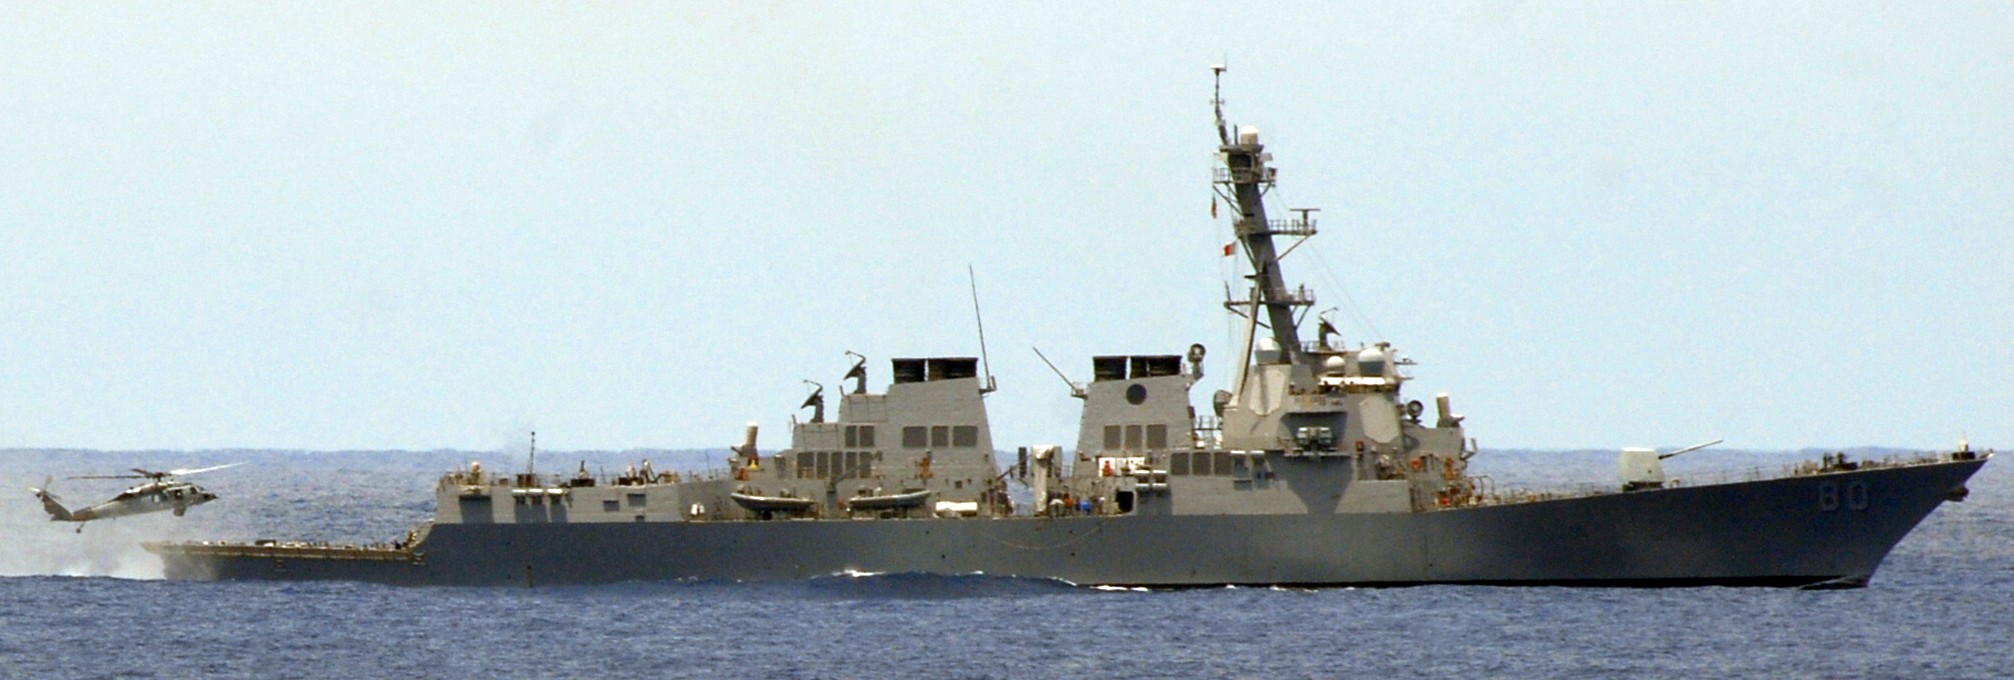 ddg-80 uss roosevelt guided missile destroyer arleigh burke class us navy 16